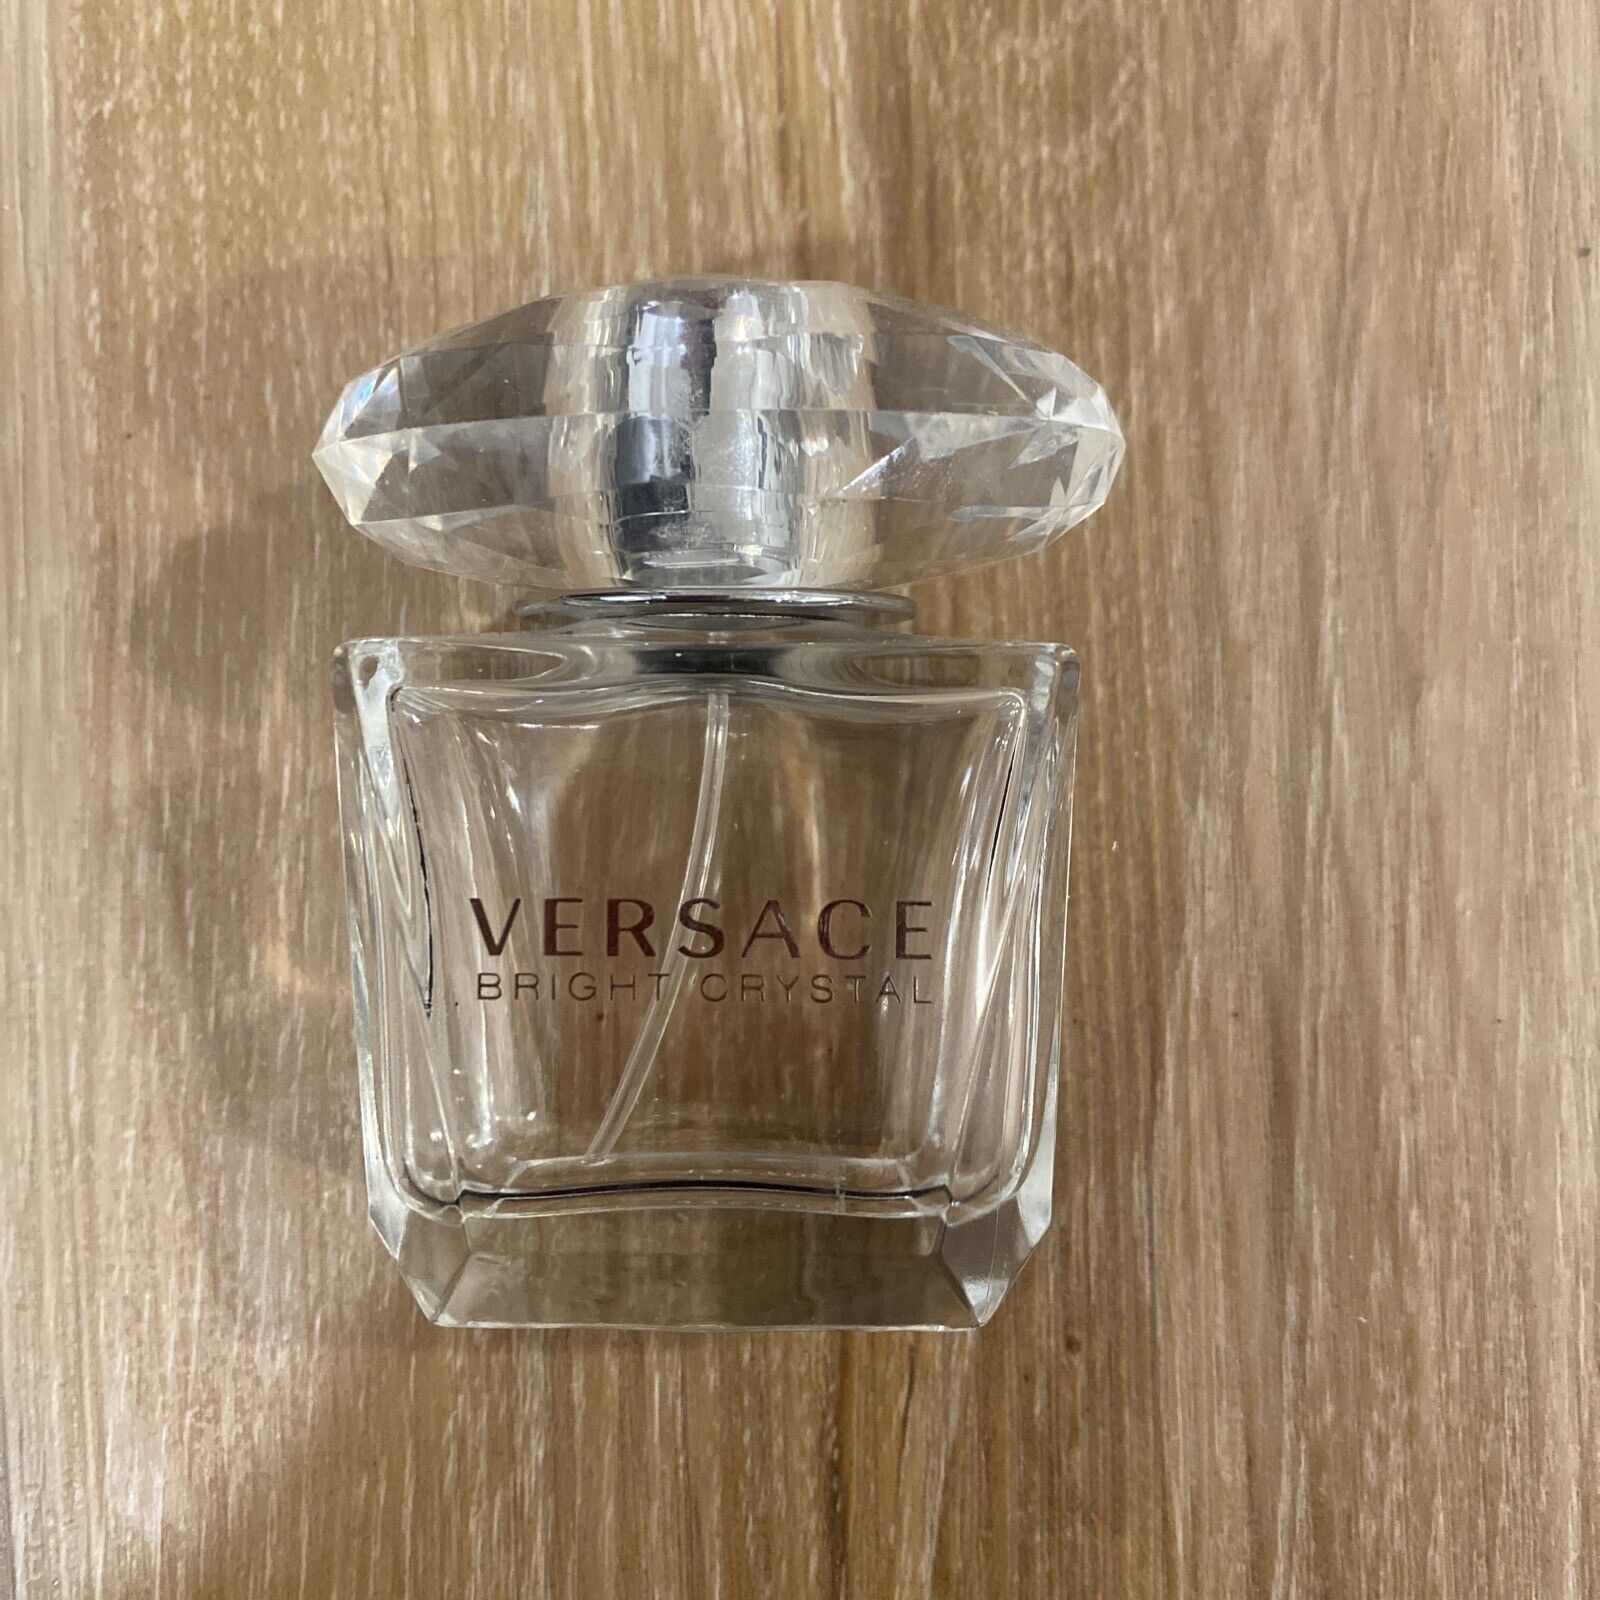 Versace Bright Crystal Perfume 30 ml 1.0 oz Empty Bottle Eau De Toilette Italy